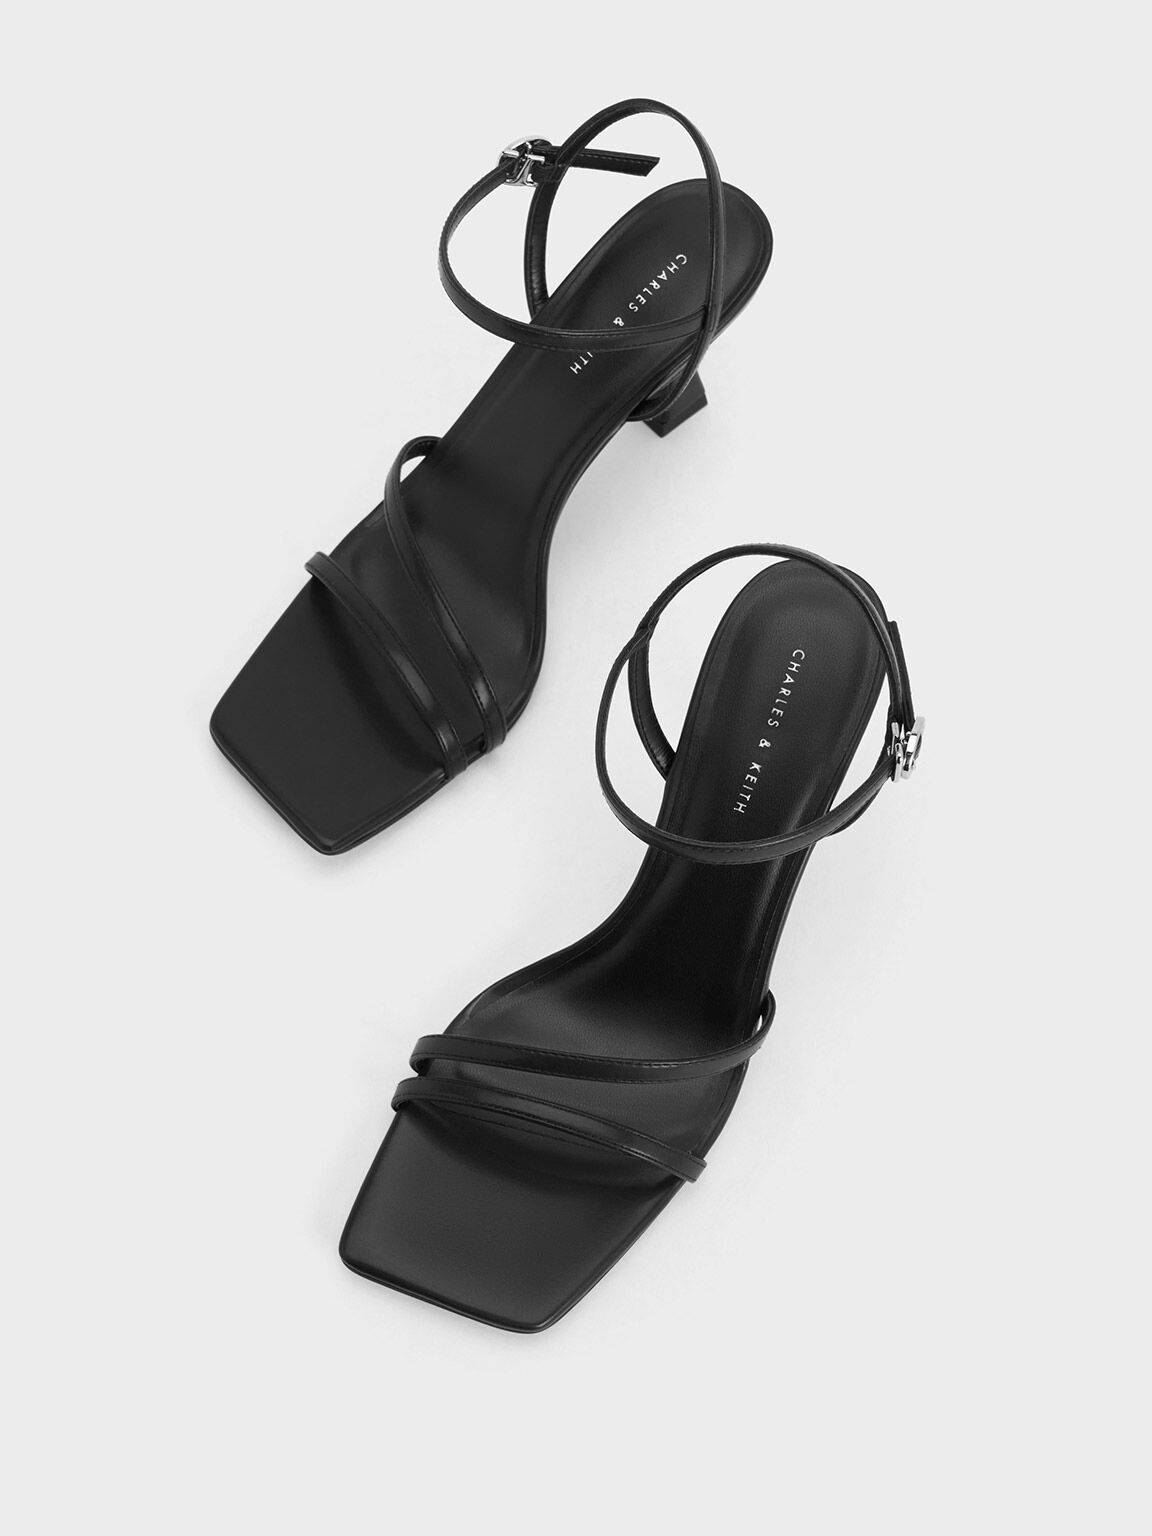 ZARA black strappy leather sandal heels ankle strap sold out blogger US 10  41 | eBay